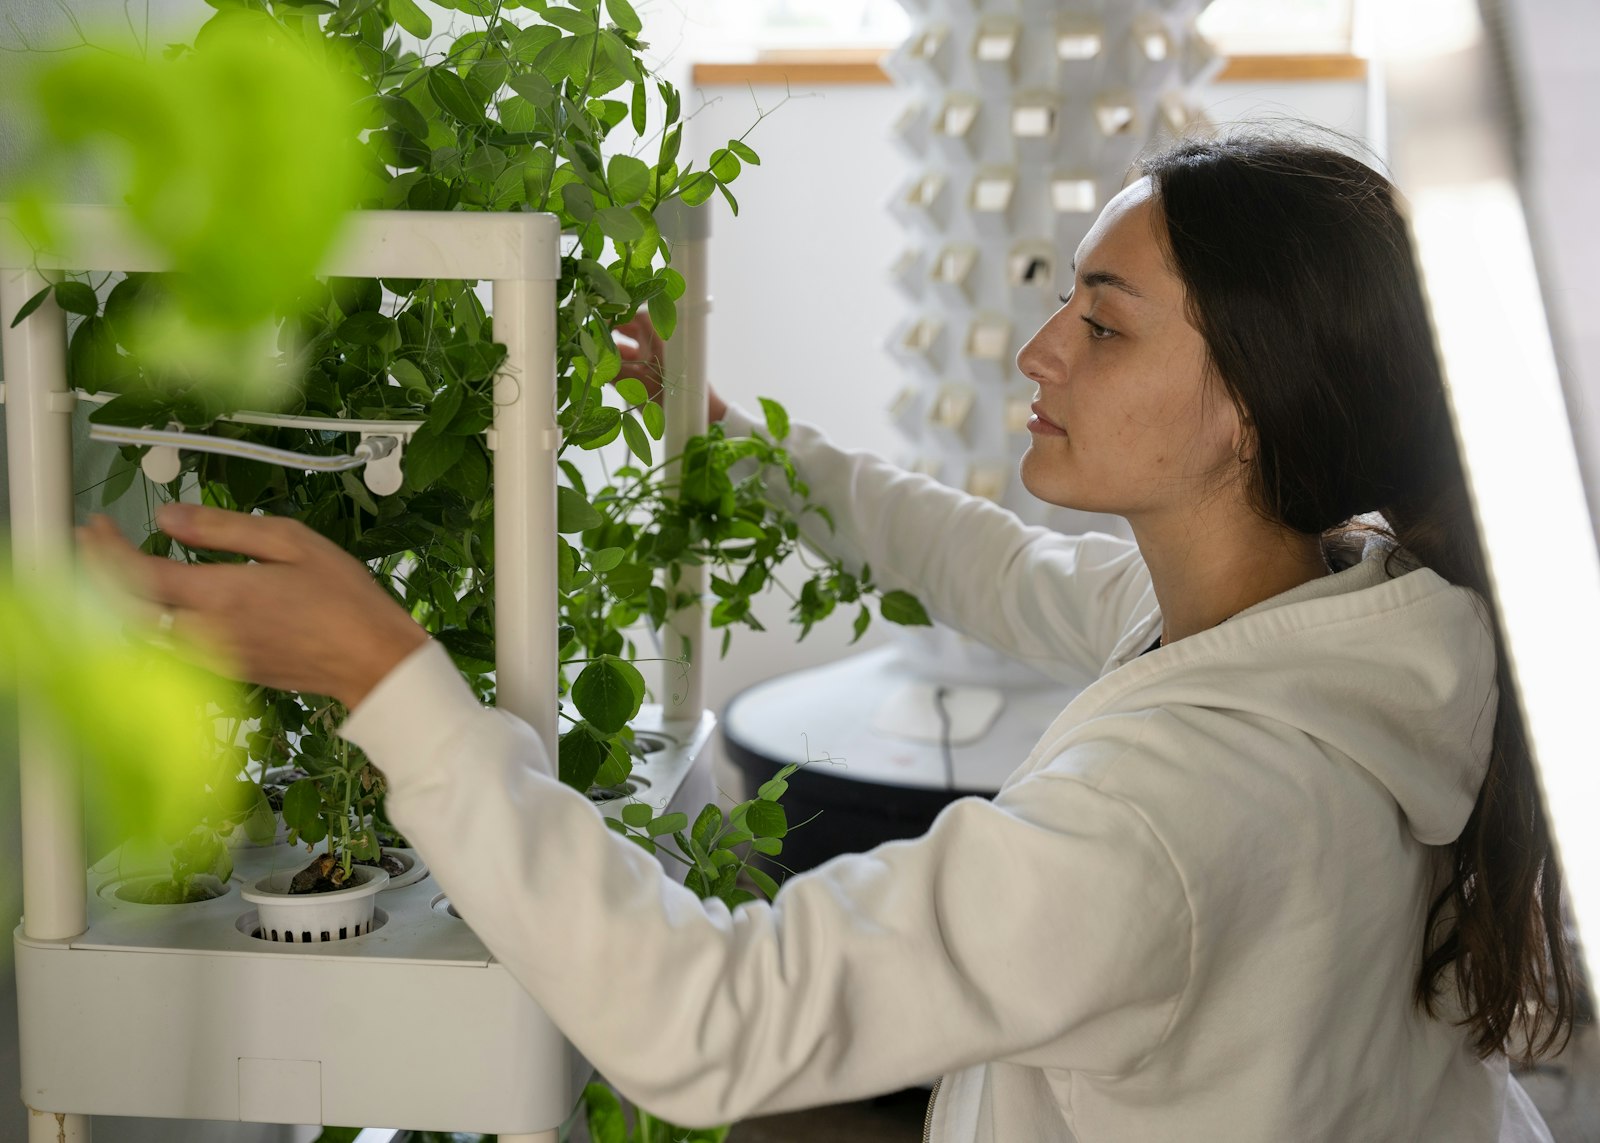 University of Detroit Mercy junior Megi Lazri checks on the vegetables being grown on the aeroponics shelf system.